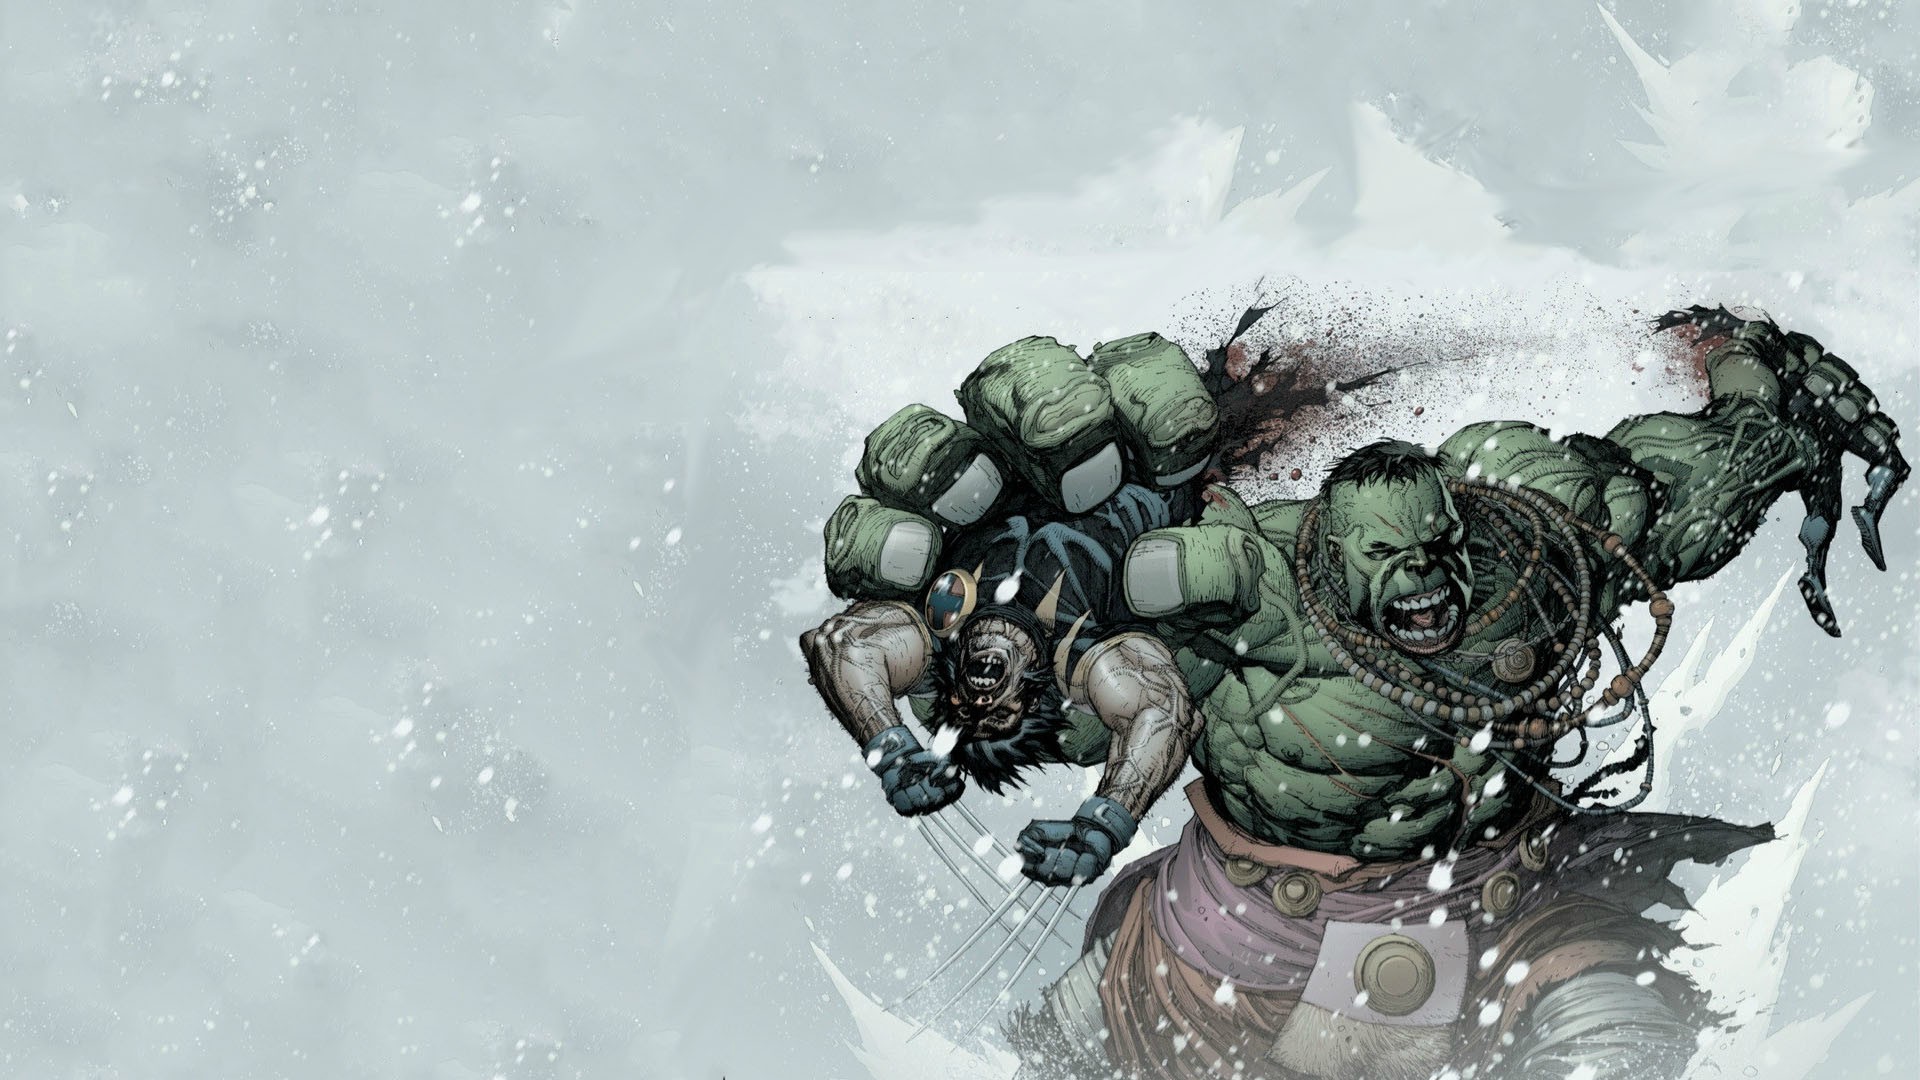 Hulk vs Wolverine [1920x1080] iimgurcom